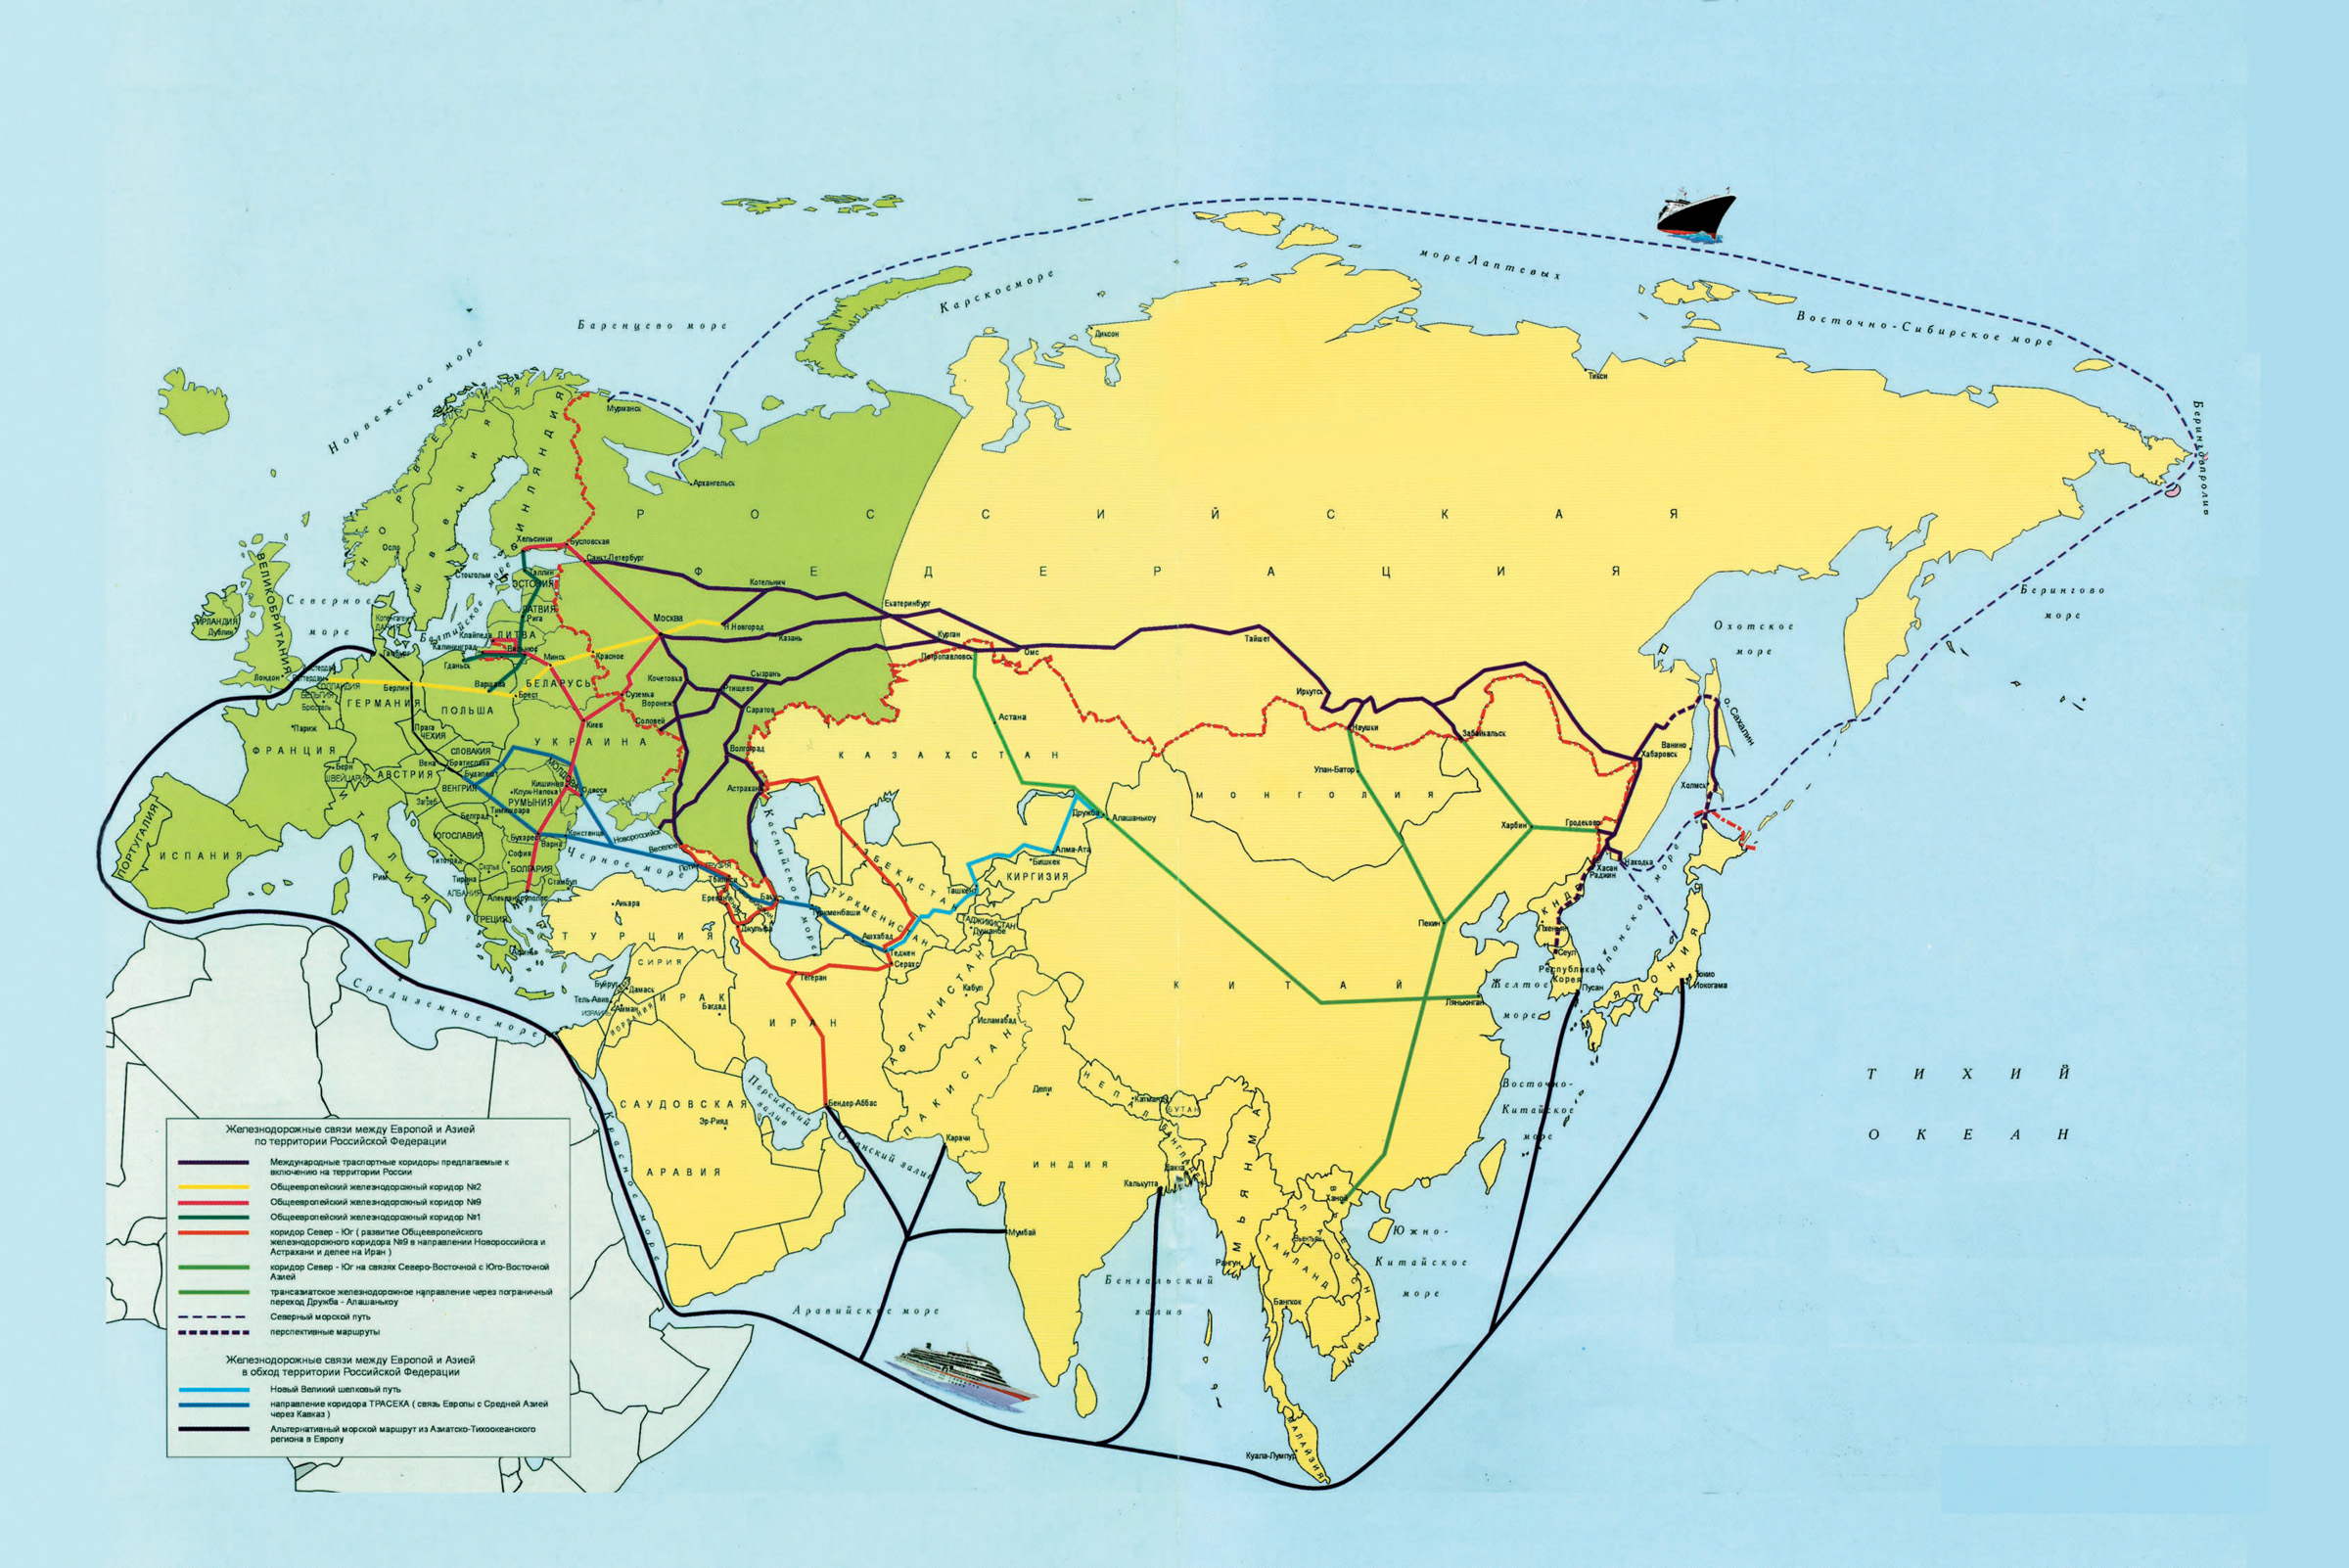 Transport corridors between Europe and Asia